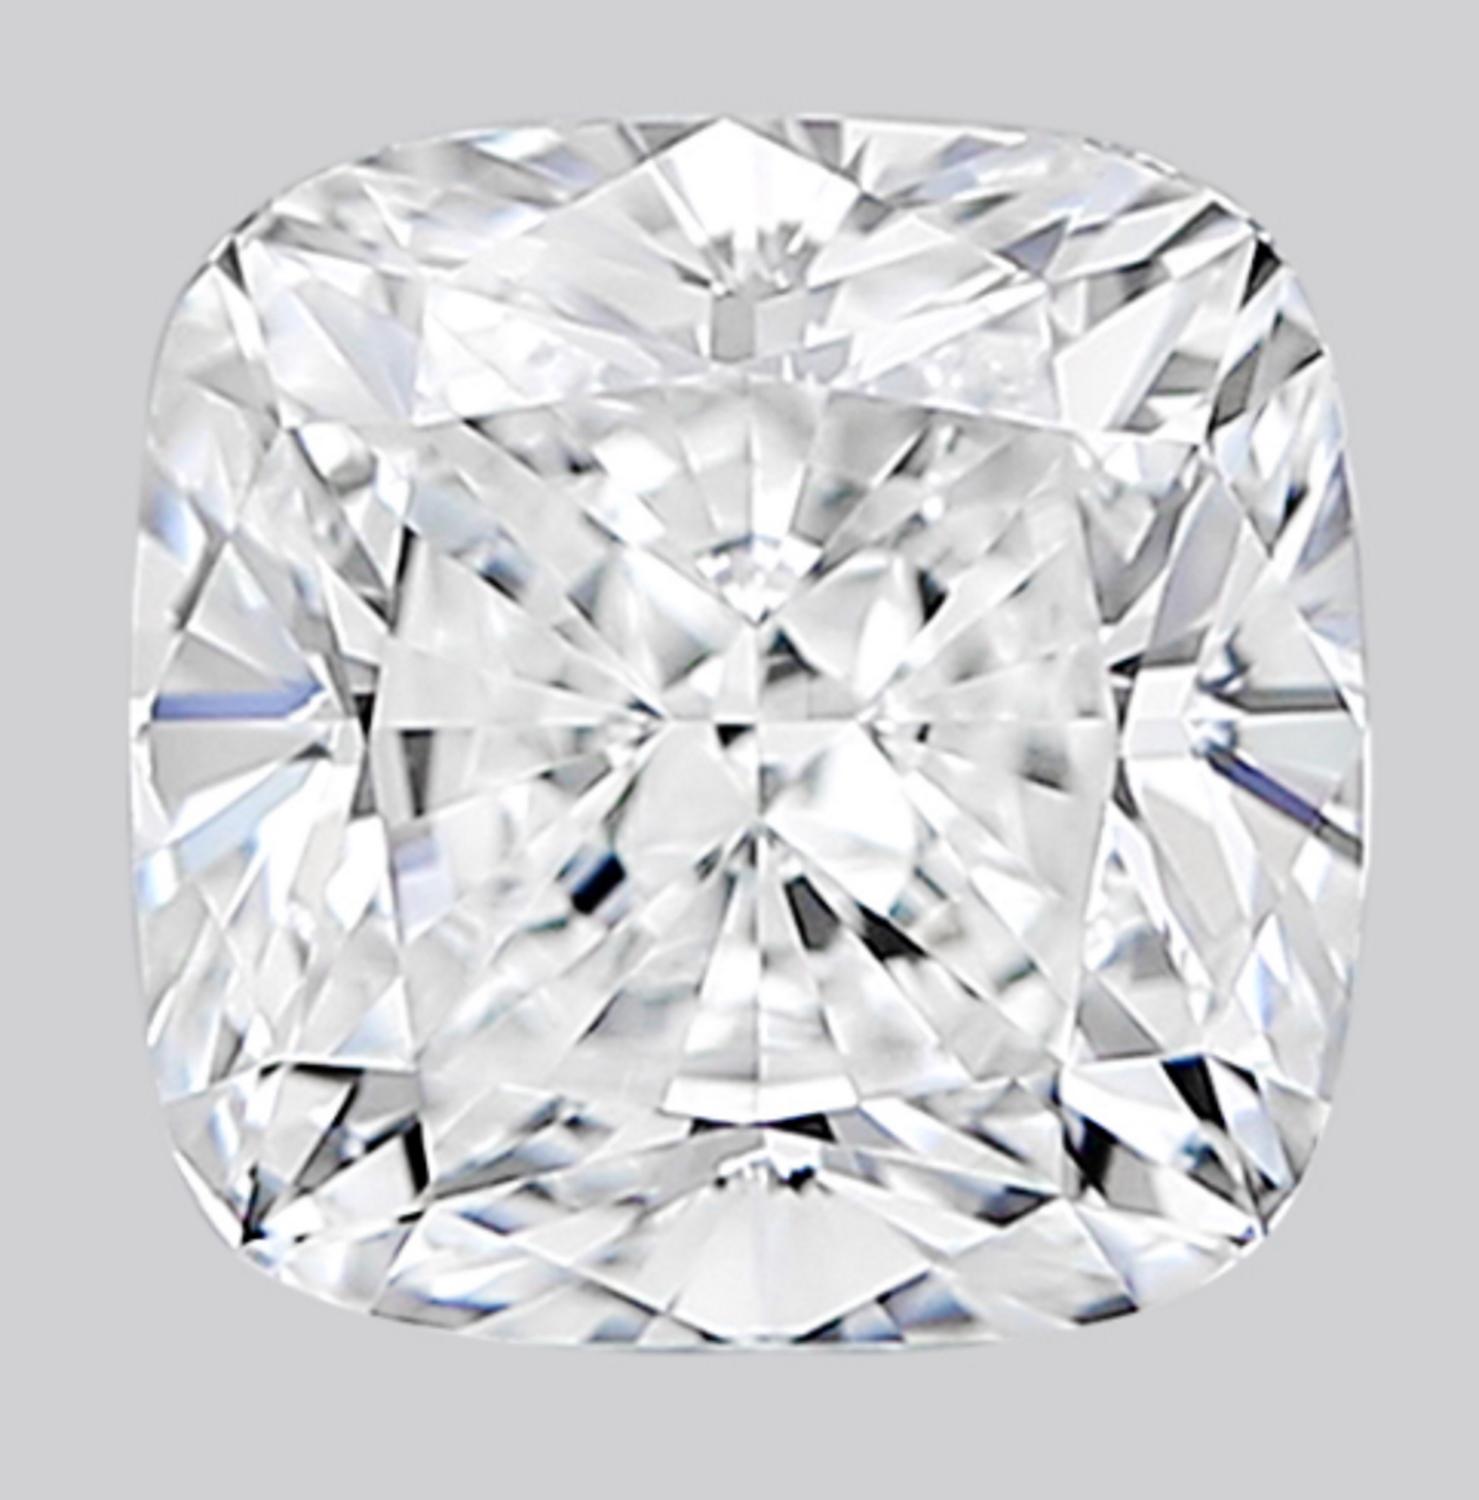 6 carat diamond ring